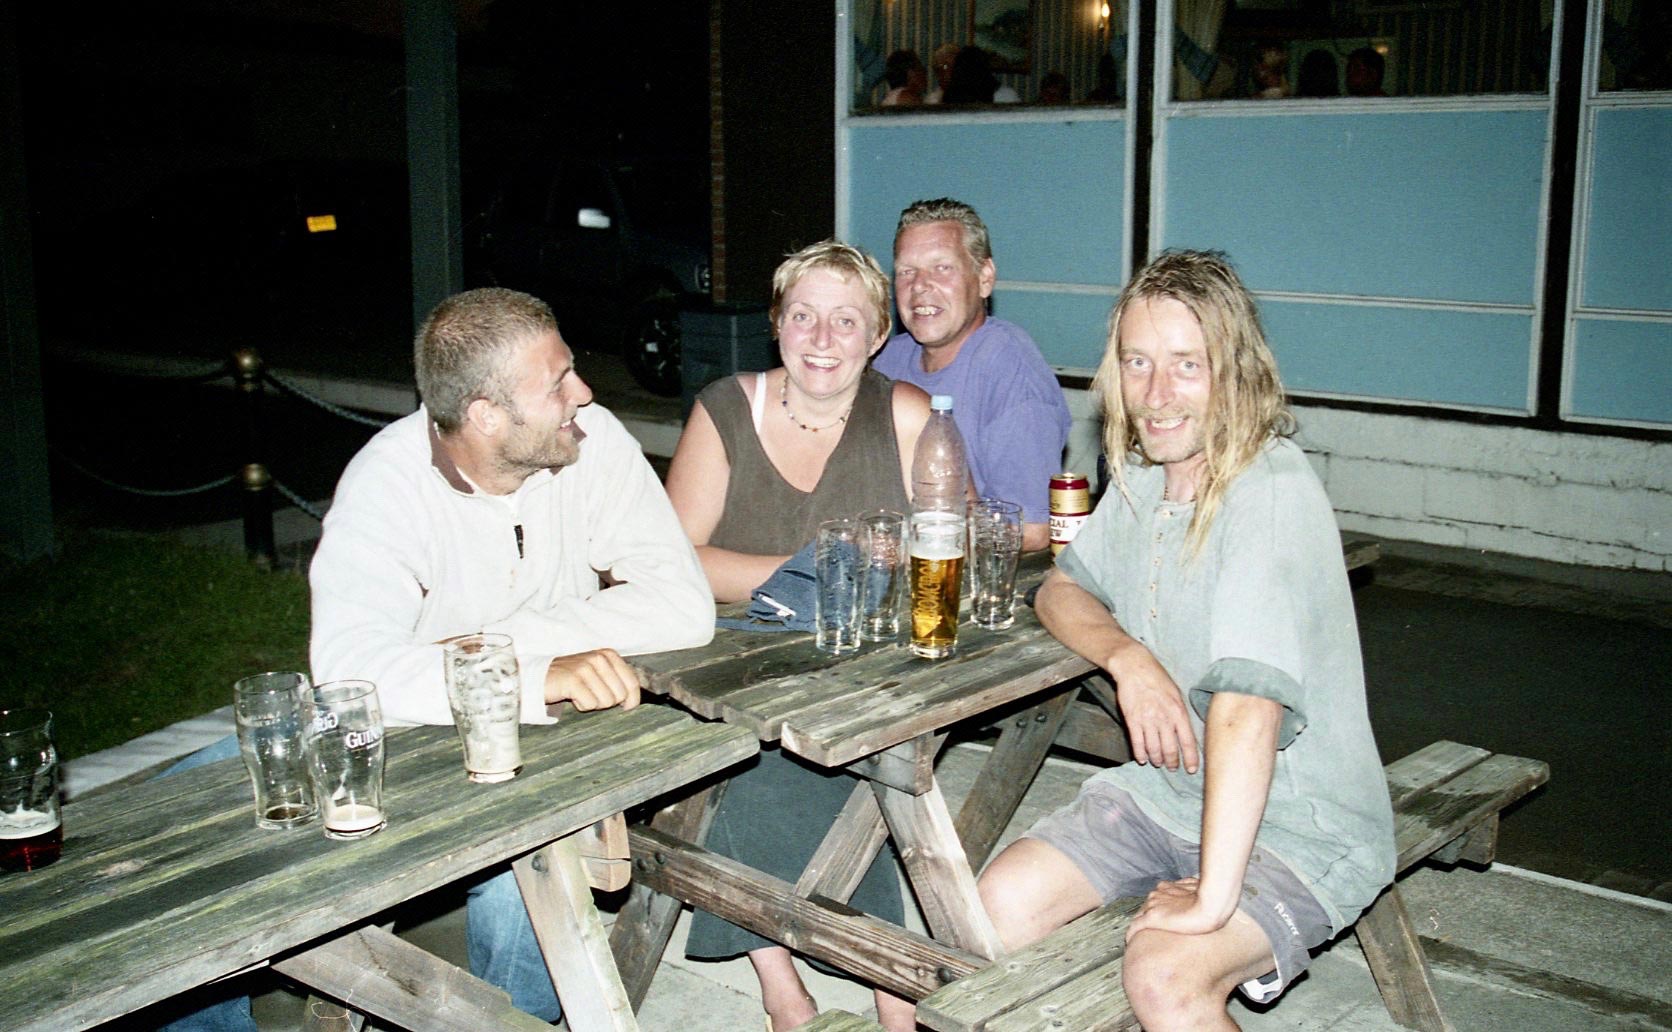 Sam, Paul, and friends